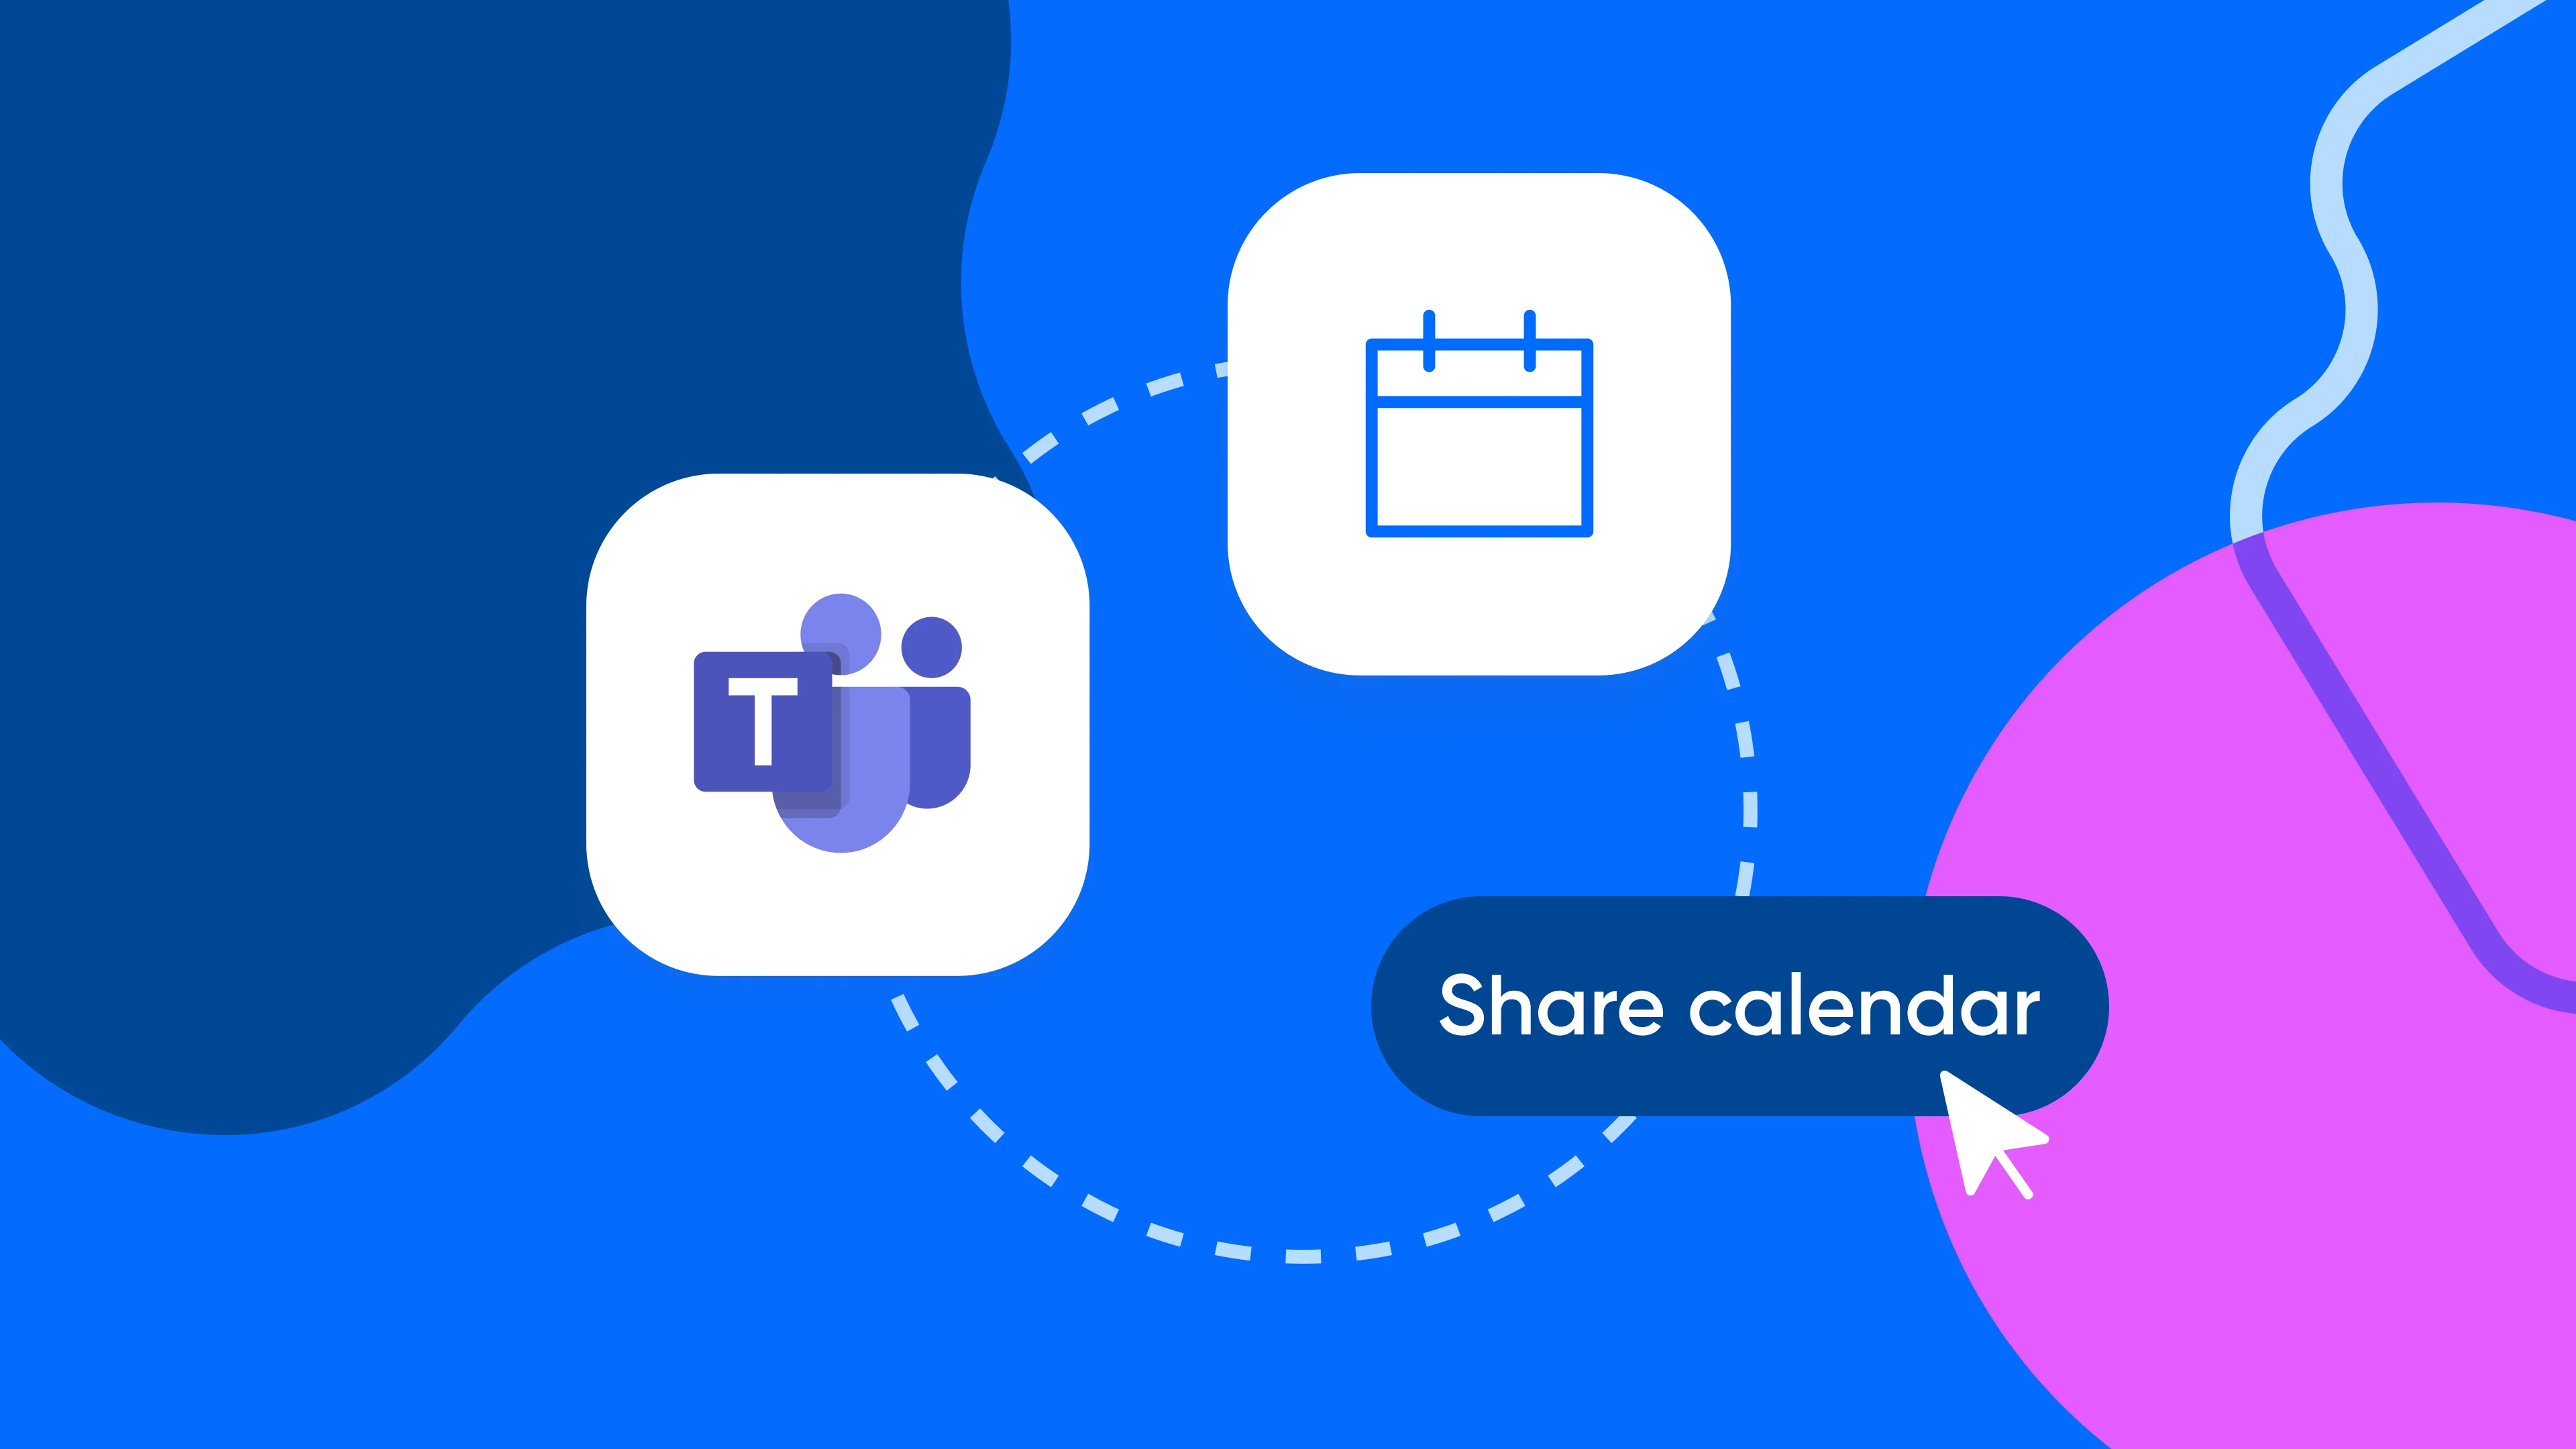 [Blog hero] How to create shared calendars in Microsoft Teams